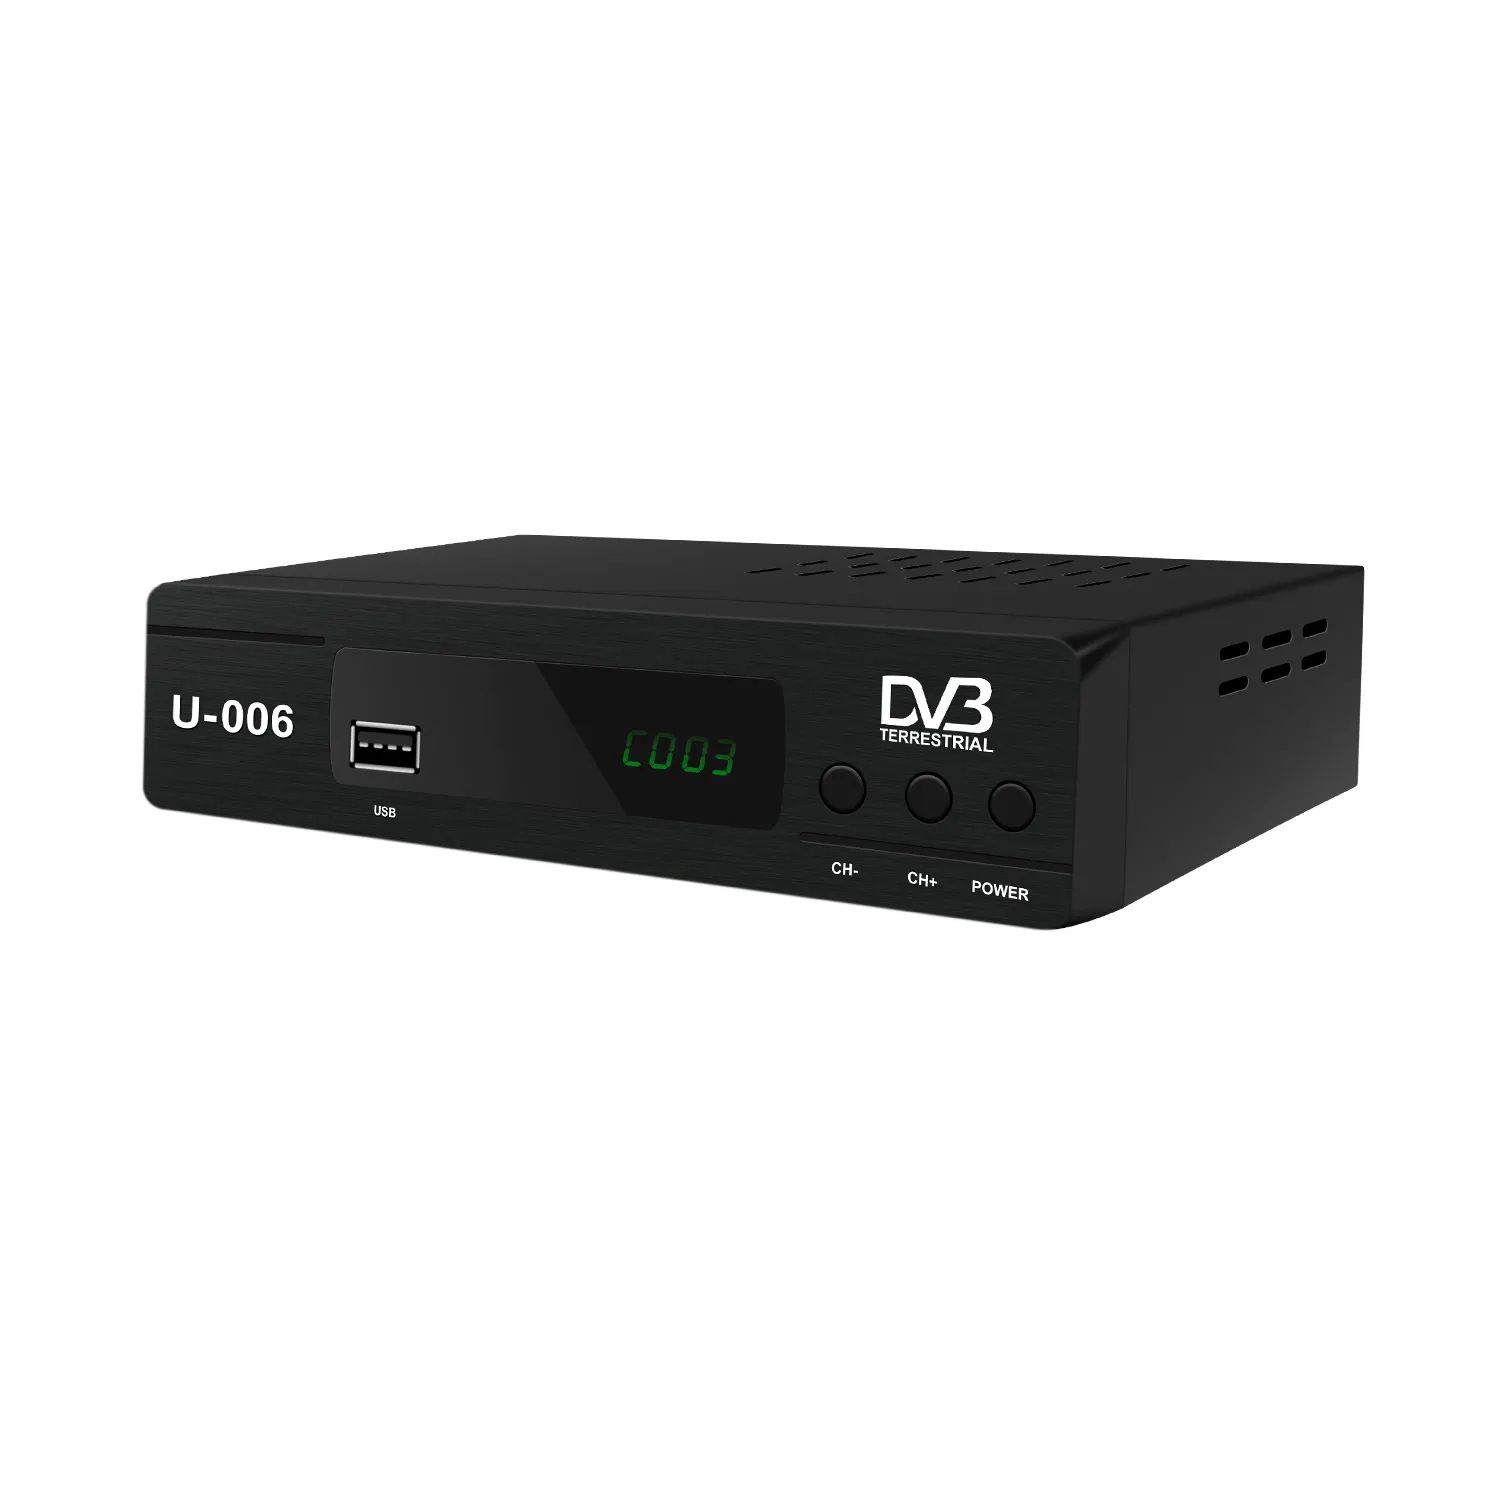 USB2.0 DVB T2 TV Tuner Wifi DVB-T2 alıcısı Full HD 1080P dijital mini TV kutusu desteği MPEG H.264 dahili rus manuel